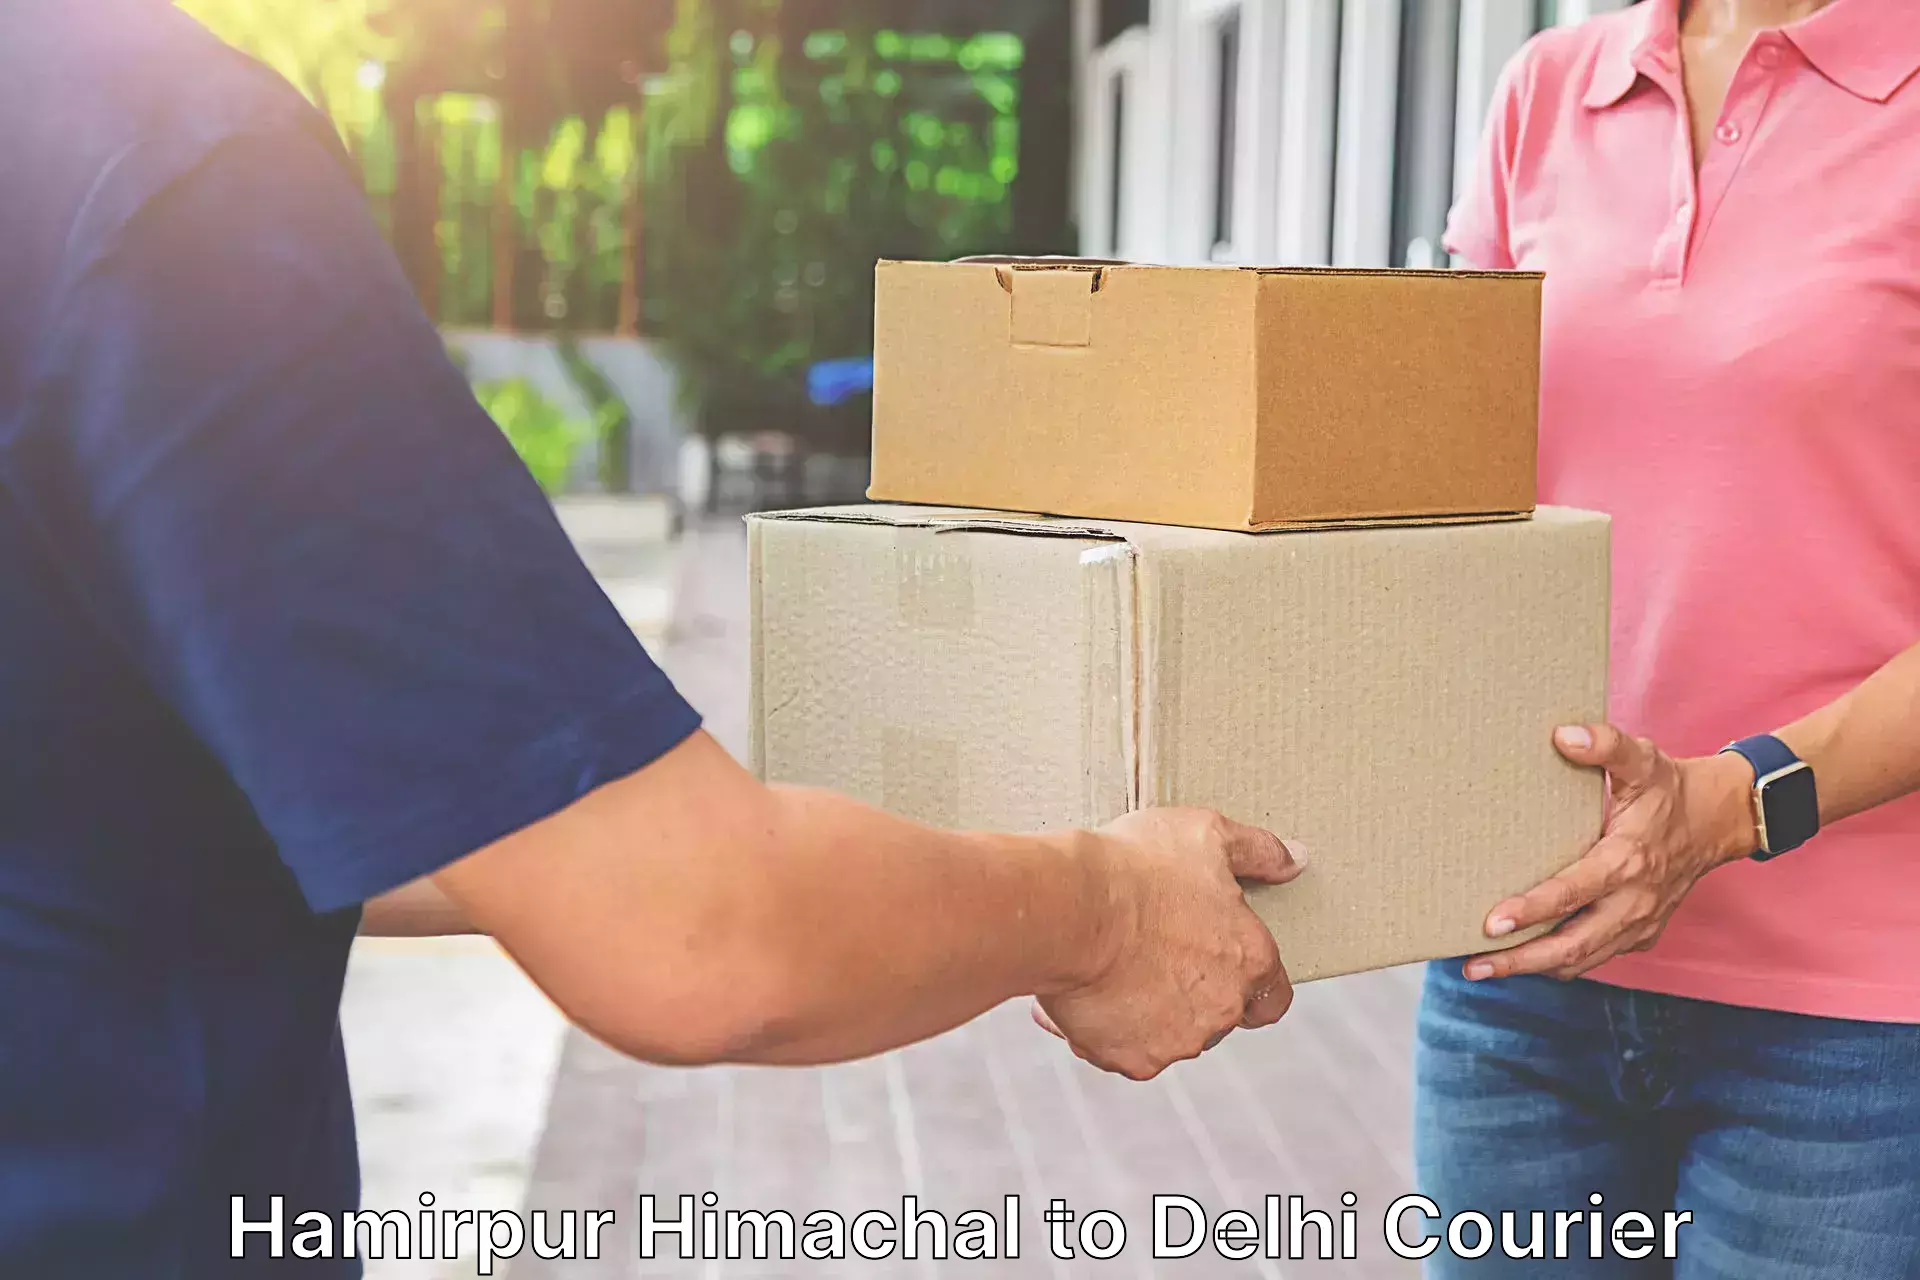 Flexible delivery schedules Hamirpur Himachal to Delhi